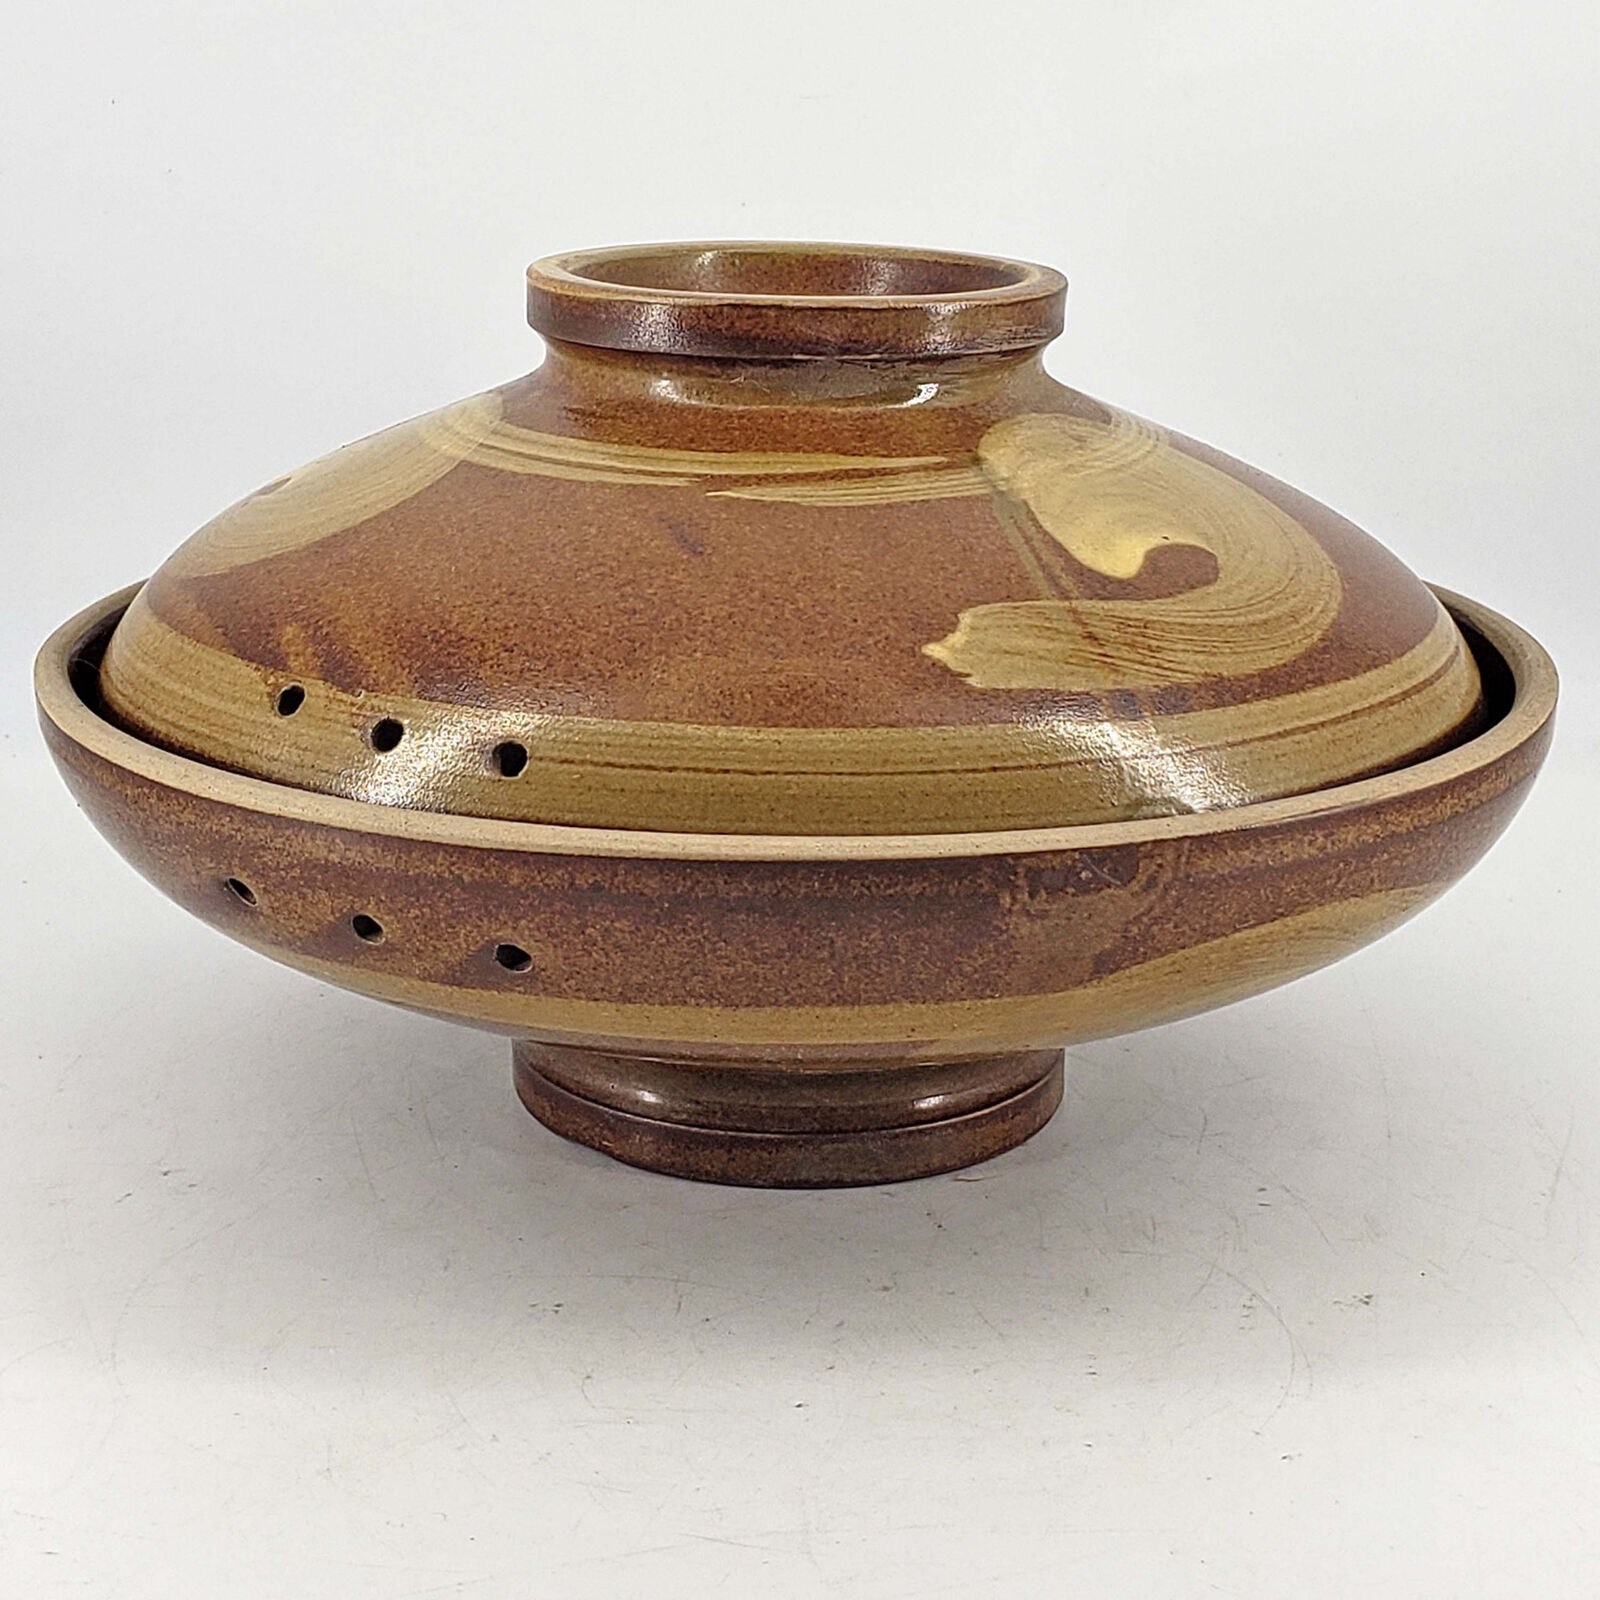 Vintage Studio Art pottery set of 2 serving bowls or bowl dish w lid casserole